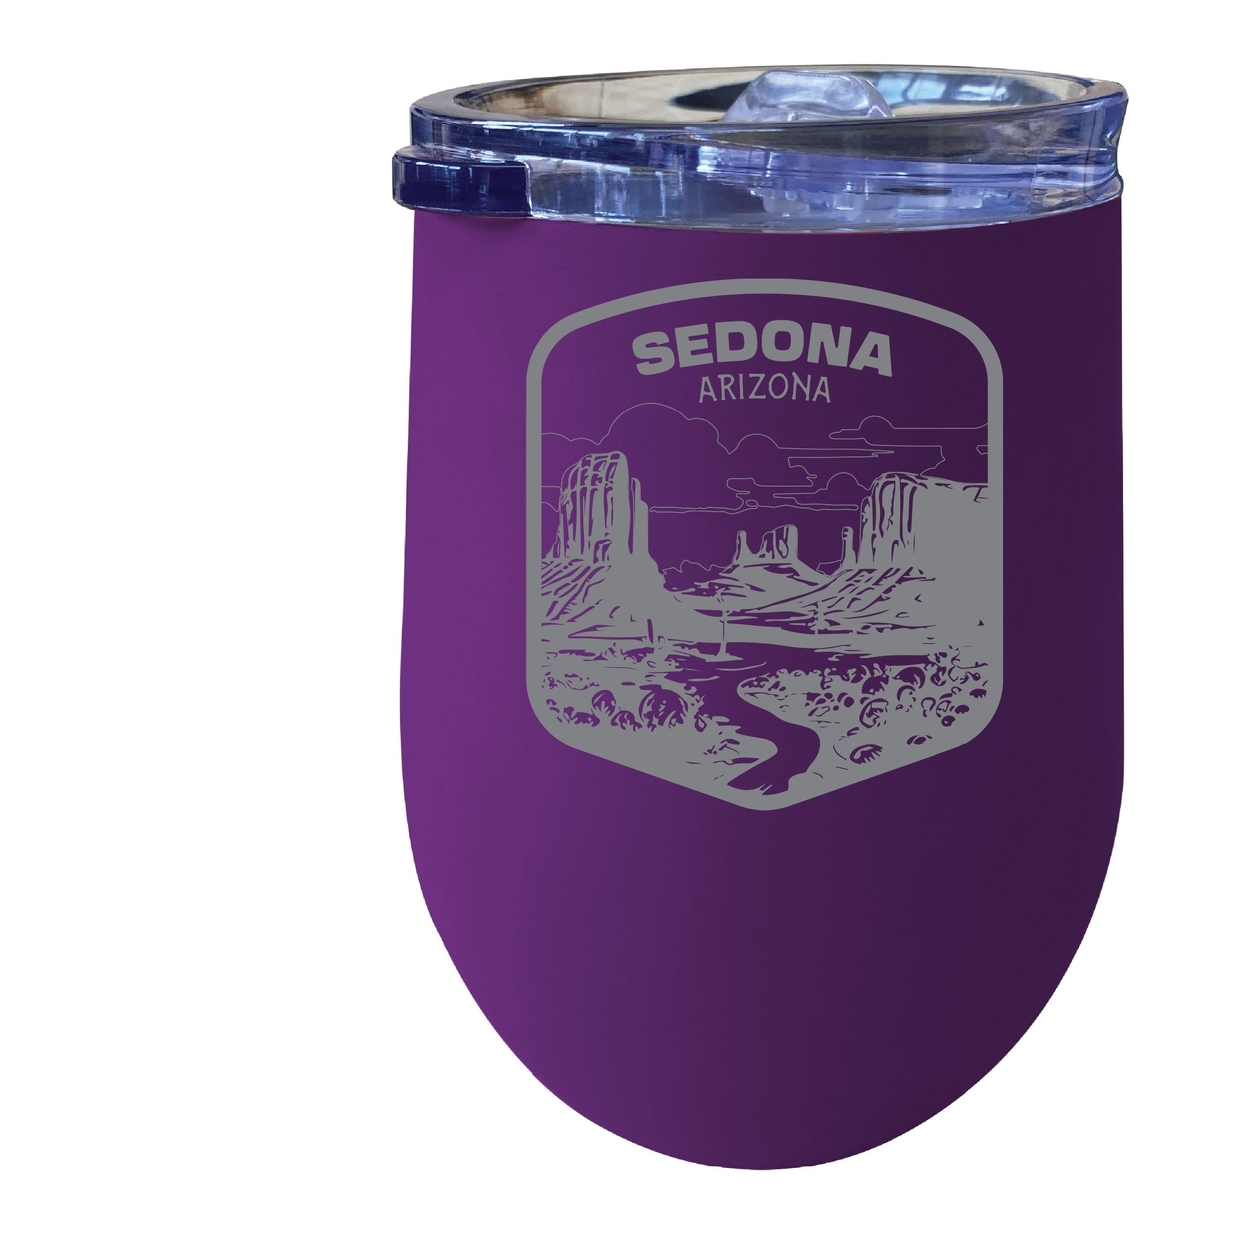 Sedona Arizona Souvenir 12 Oz Engraved Insulated Wine Stainless Steel Tumbler - Purple,,2-Pack